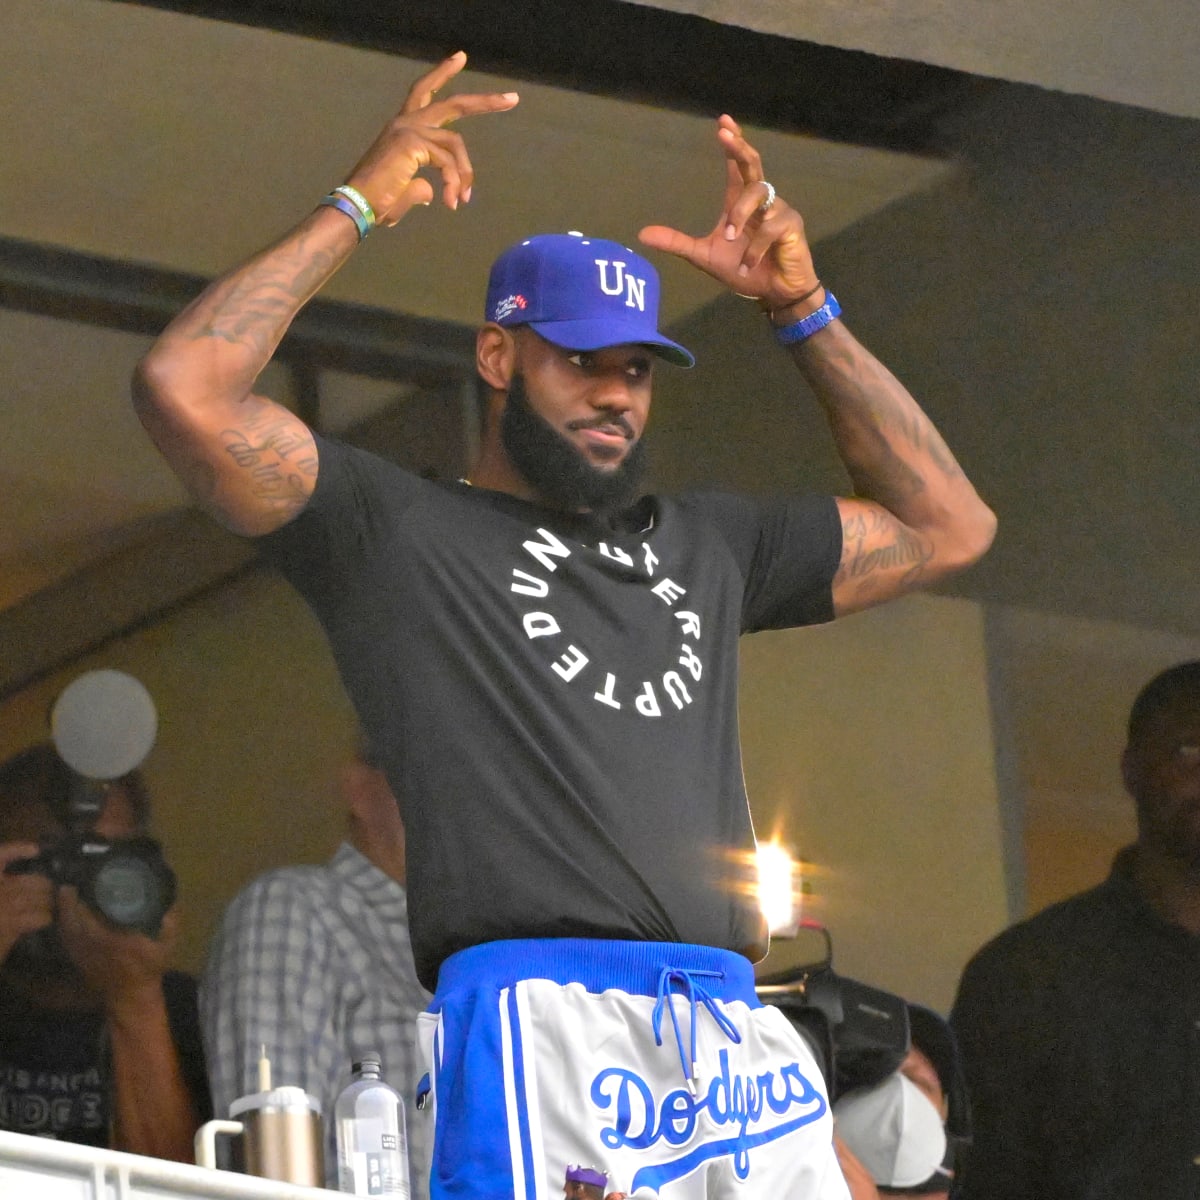 Kobe Bryant Los Angeles Dodgers hat signature shirt